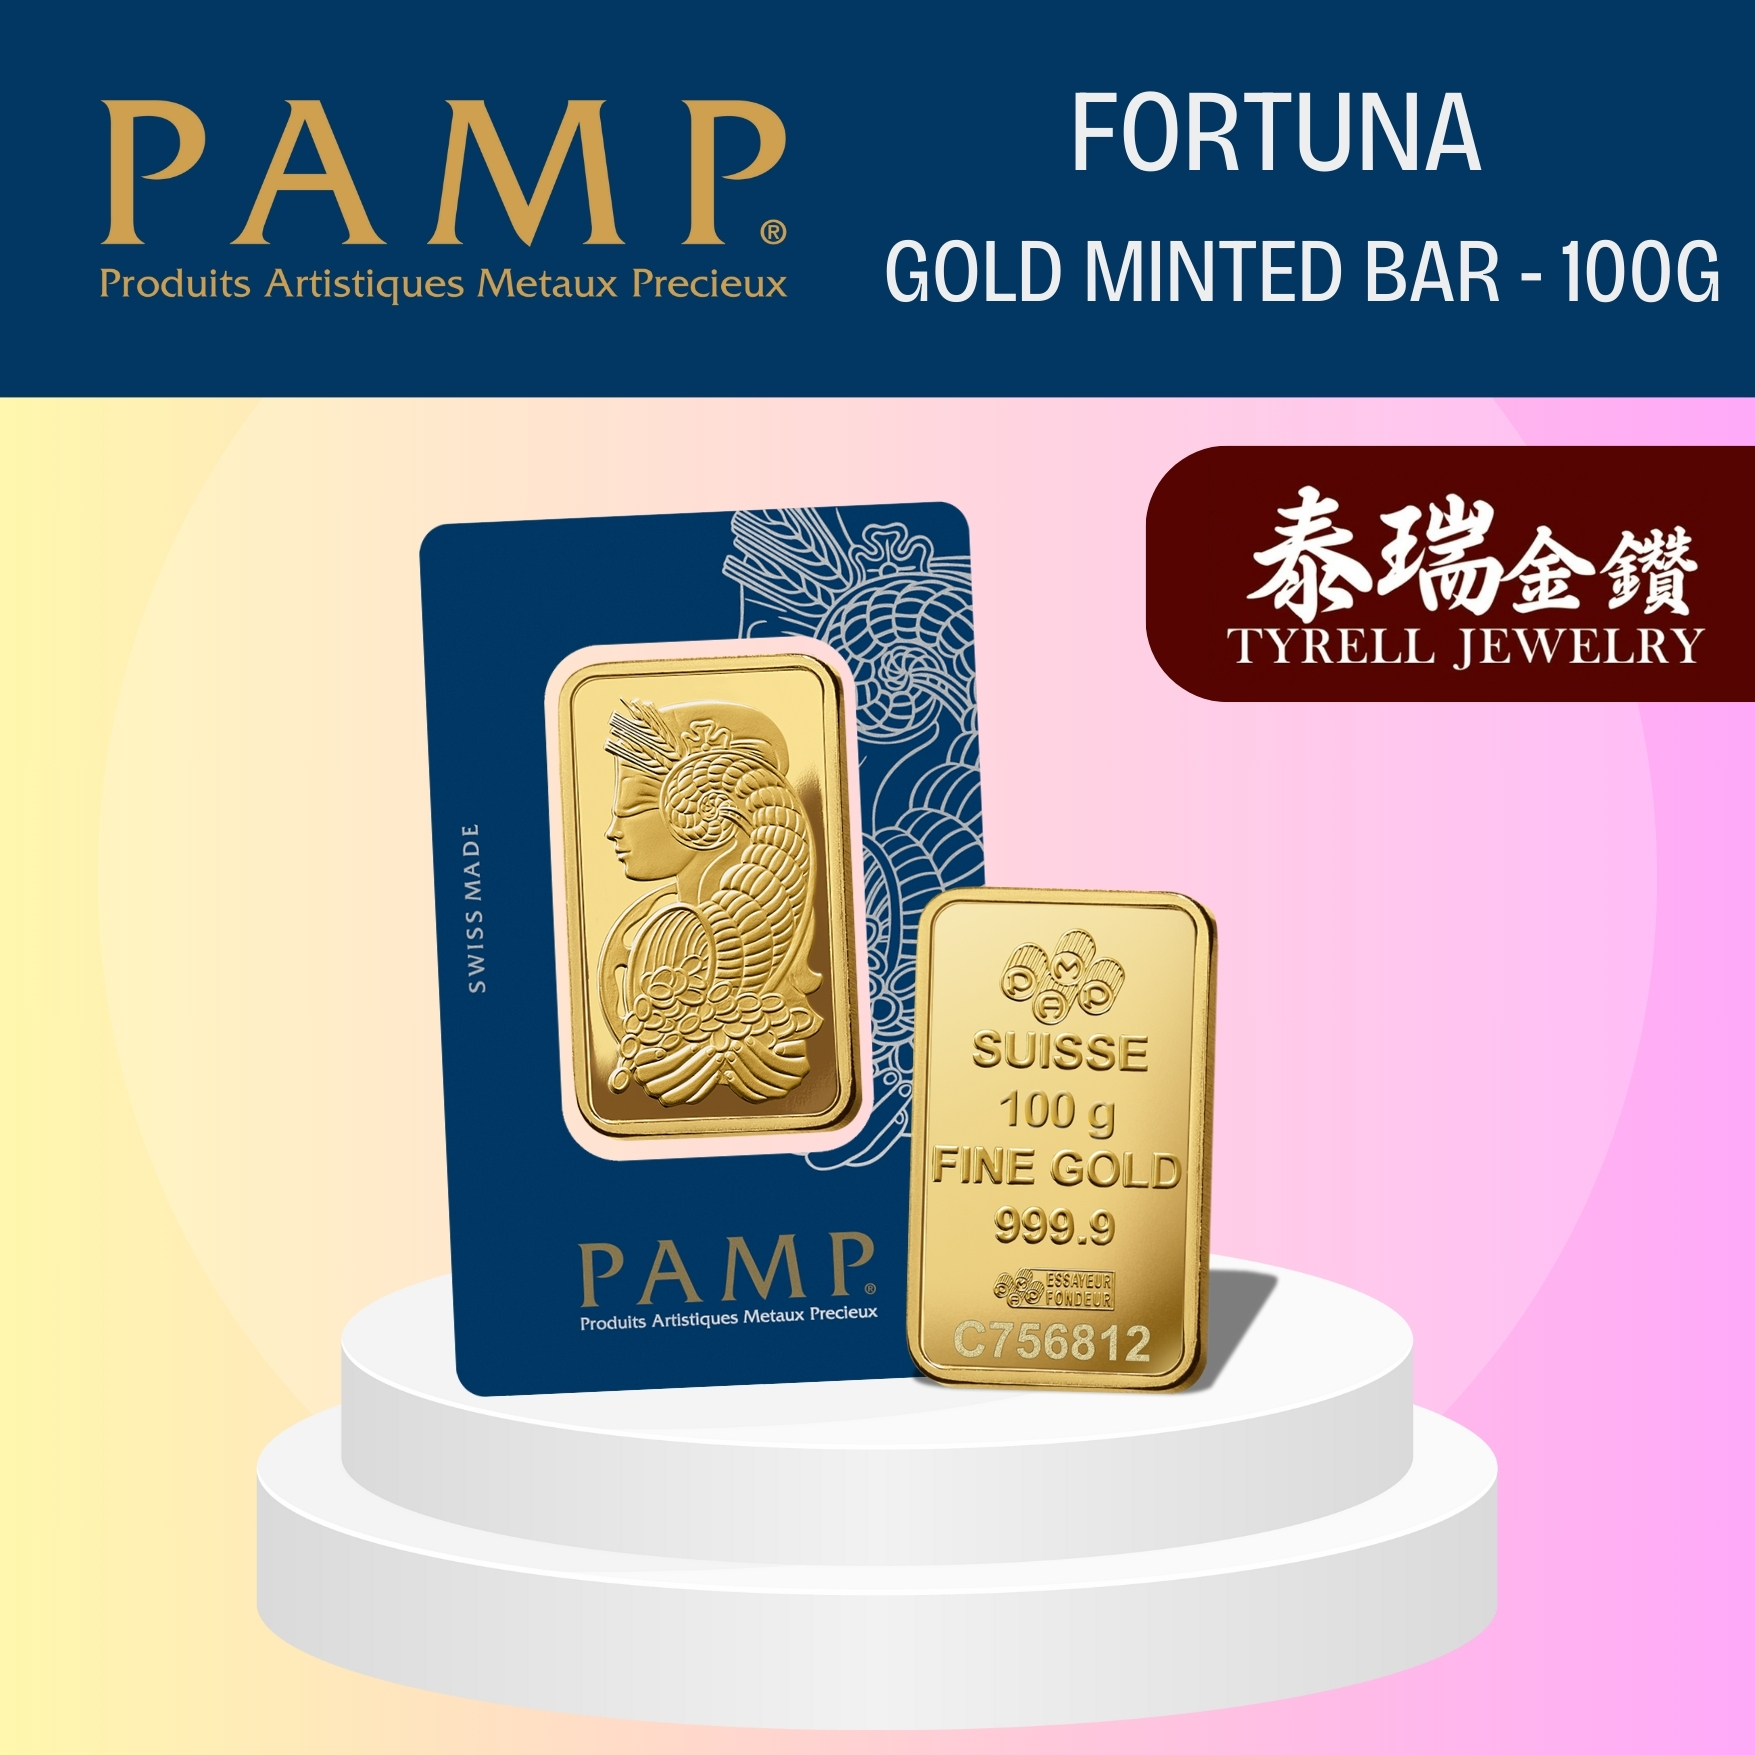 Fortuna Gold Minted Bar - 100g